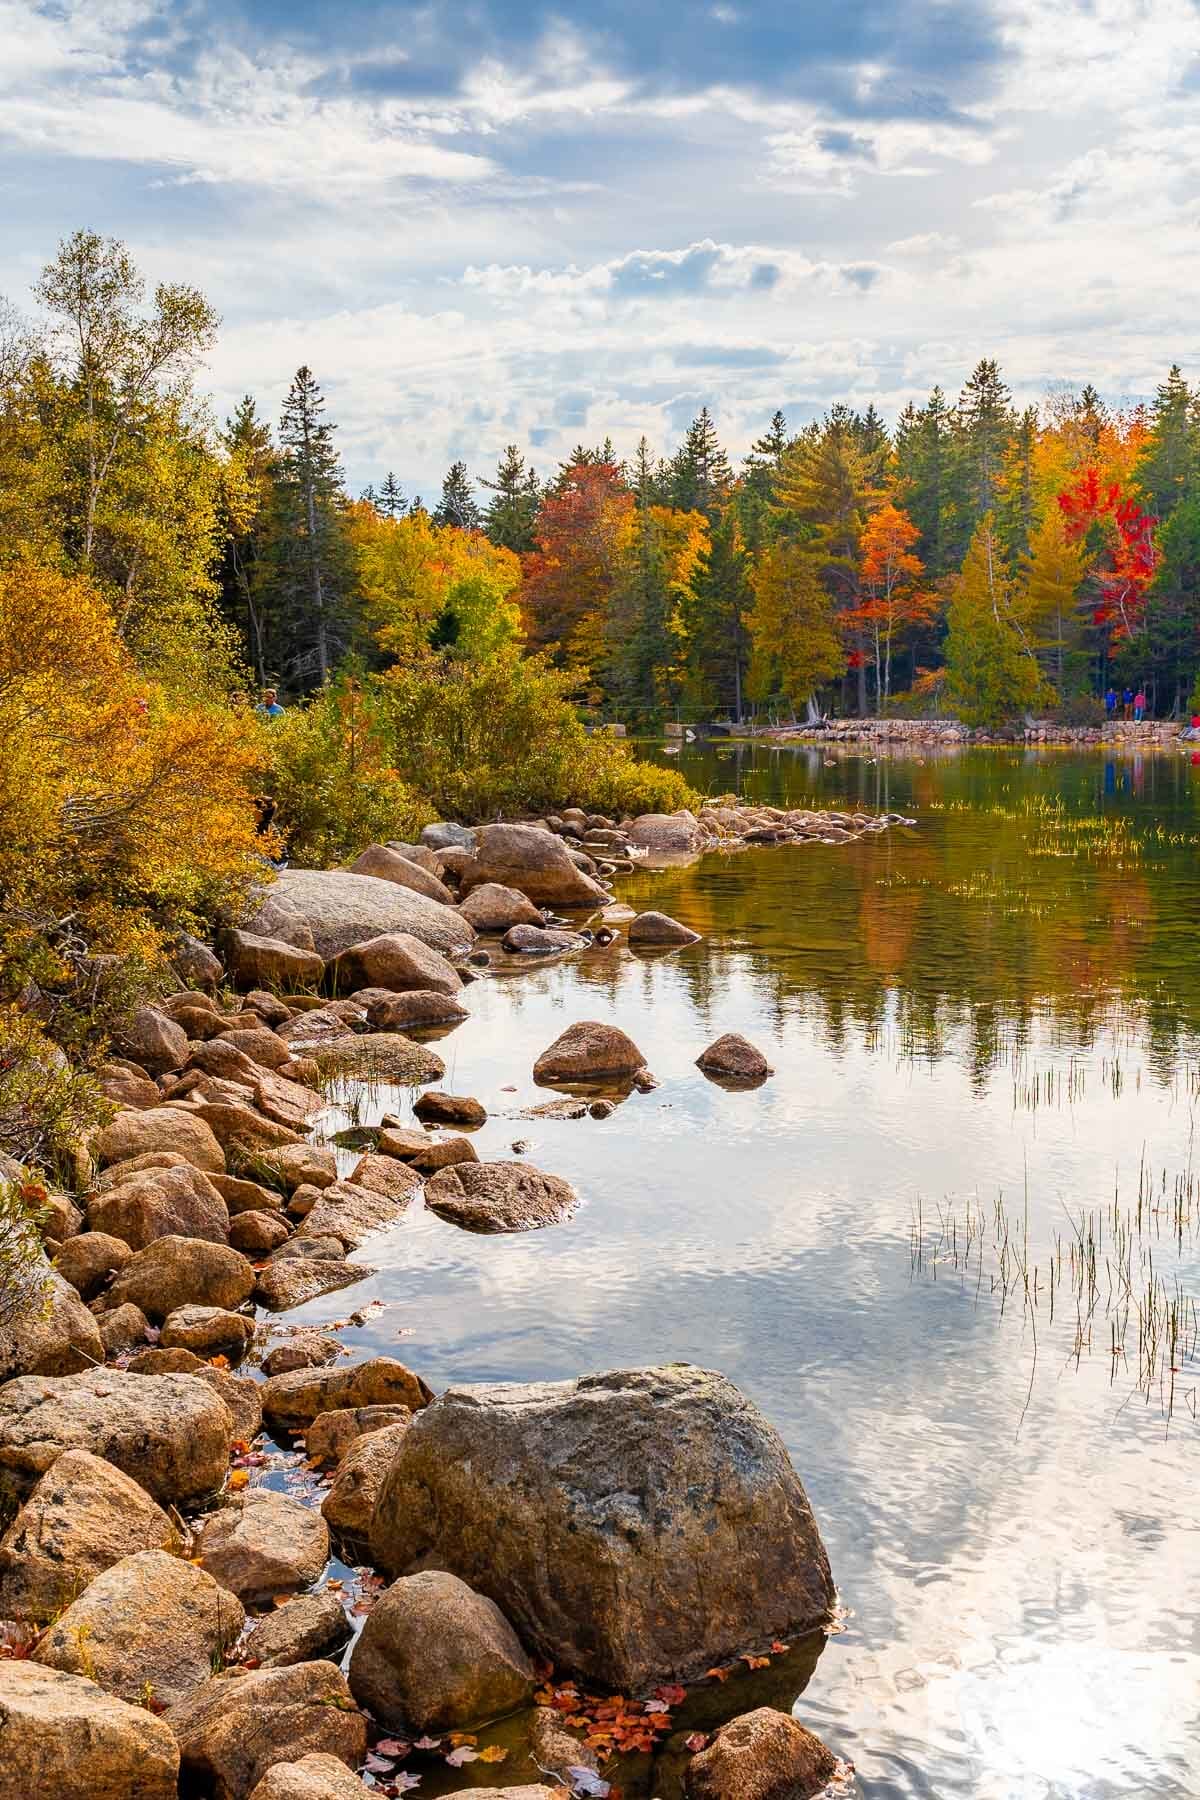 Jordan Pond at Acadia National Park in the fall